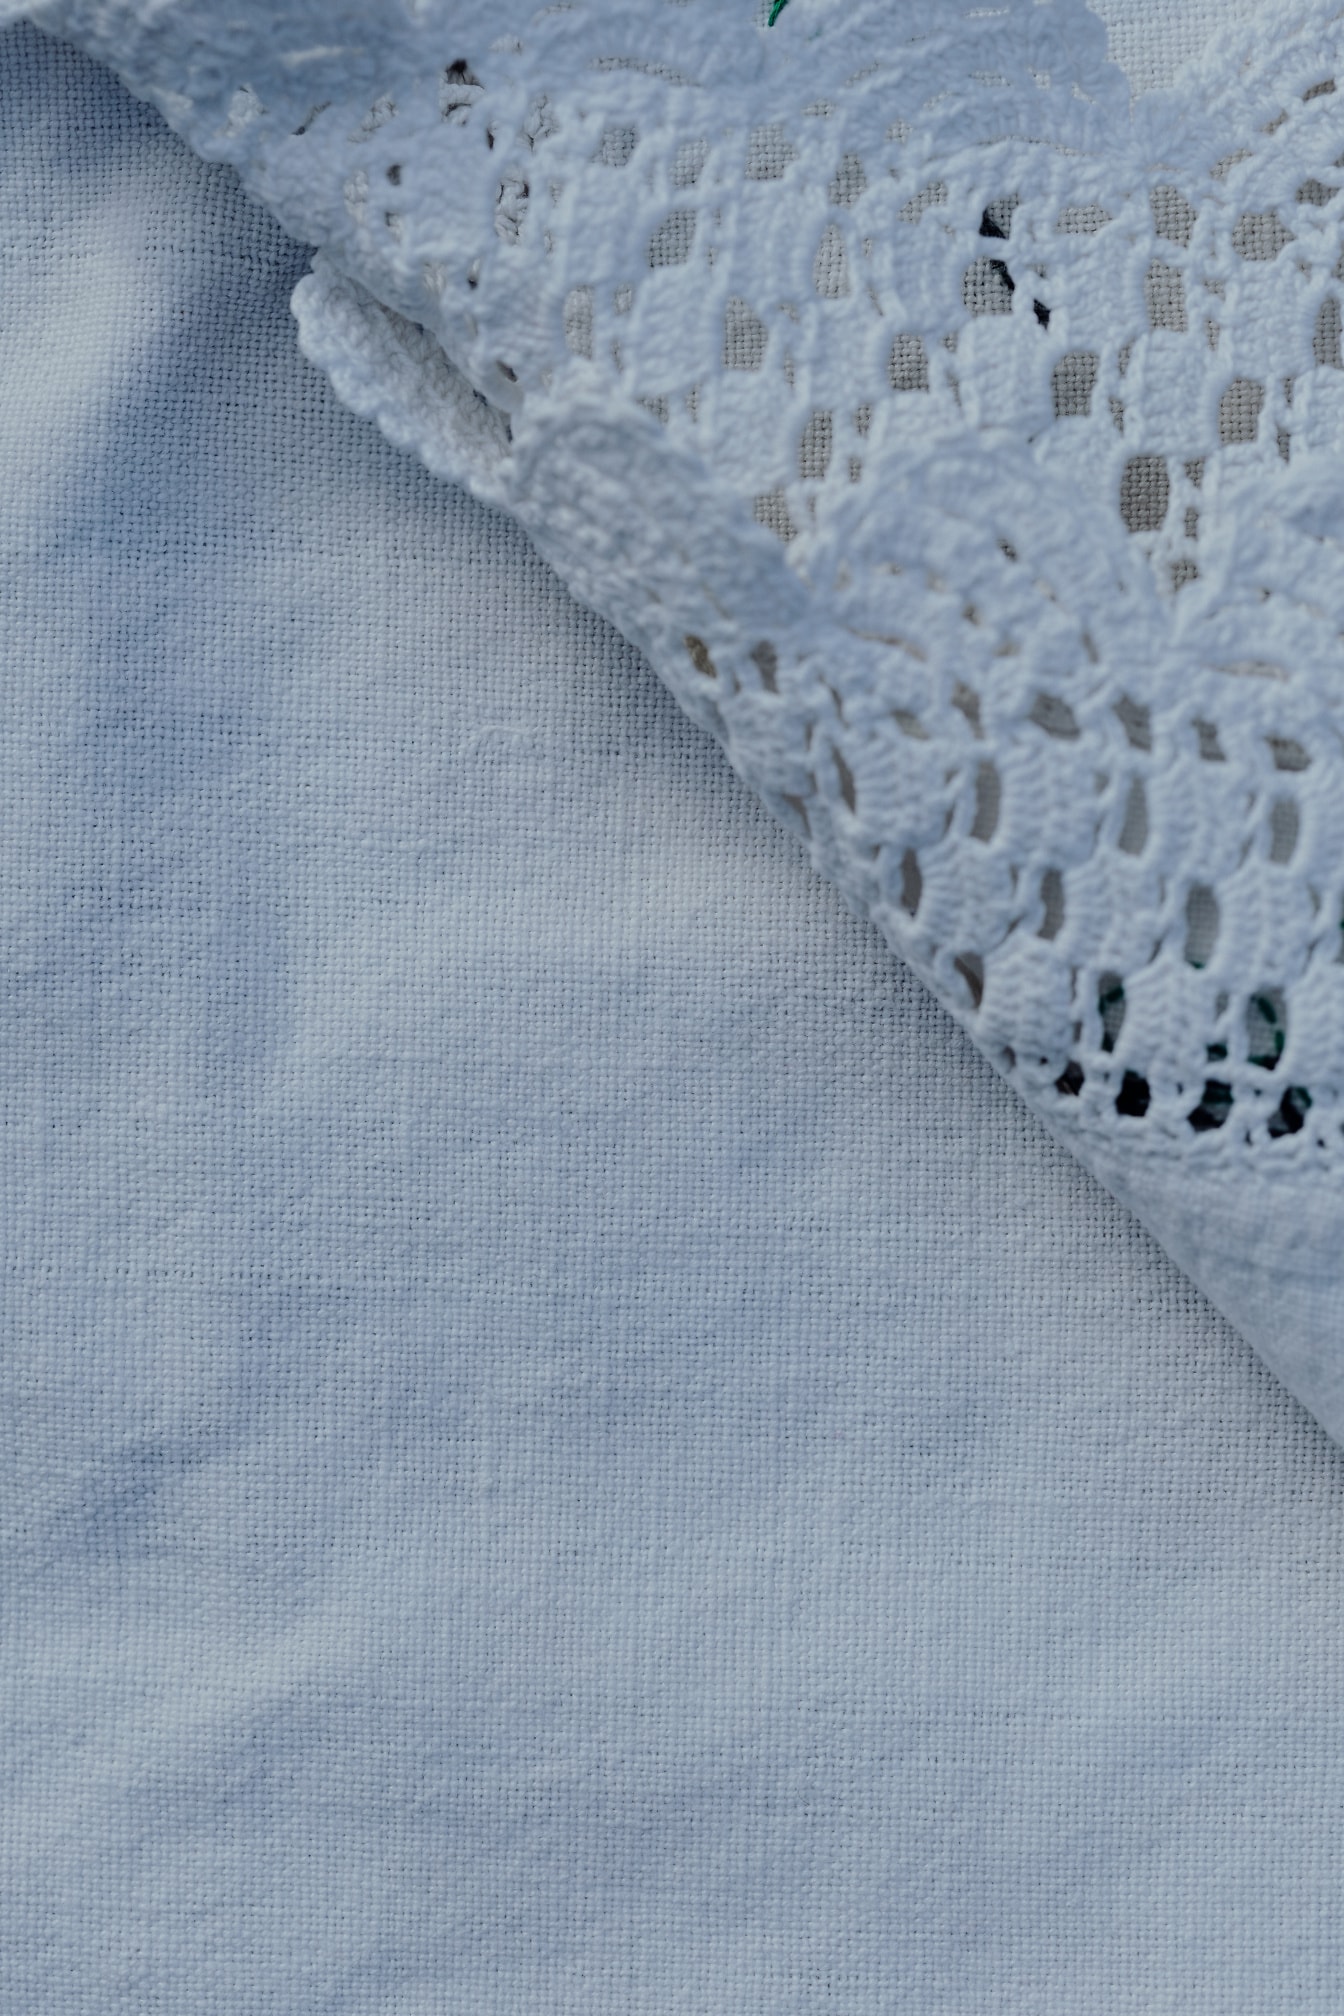 Kain linen katun putih dengan ujung renda